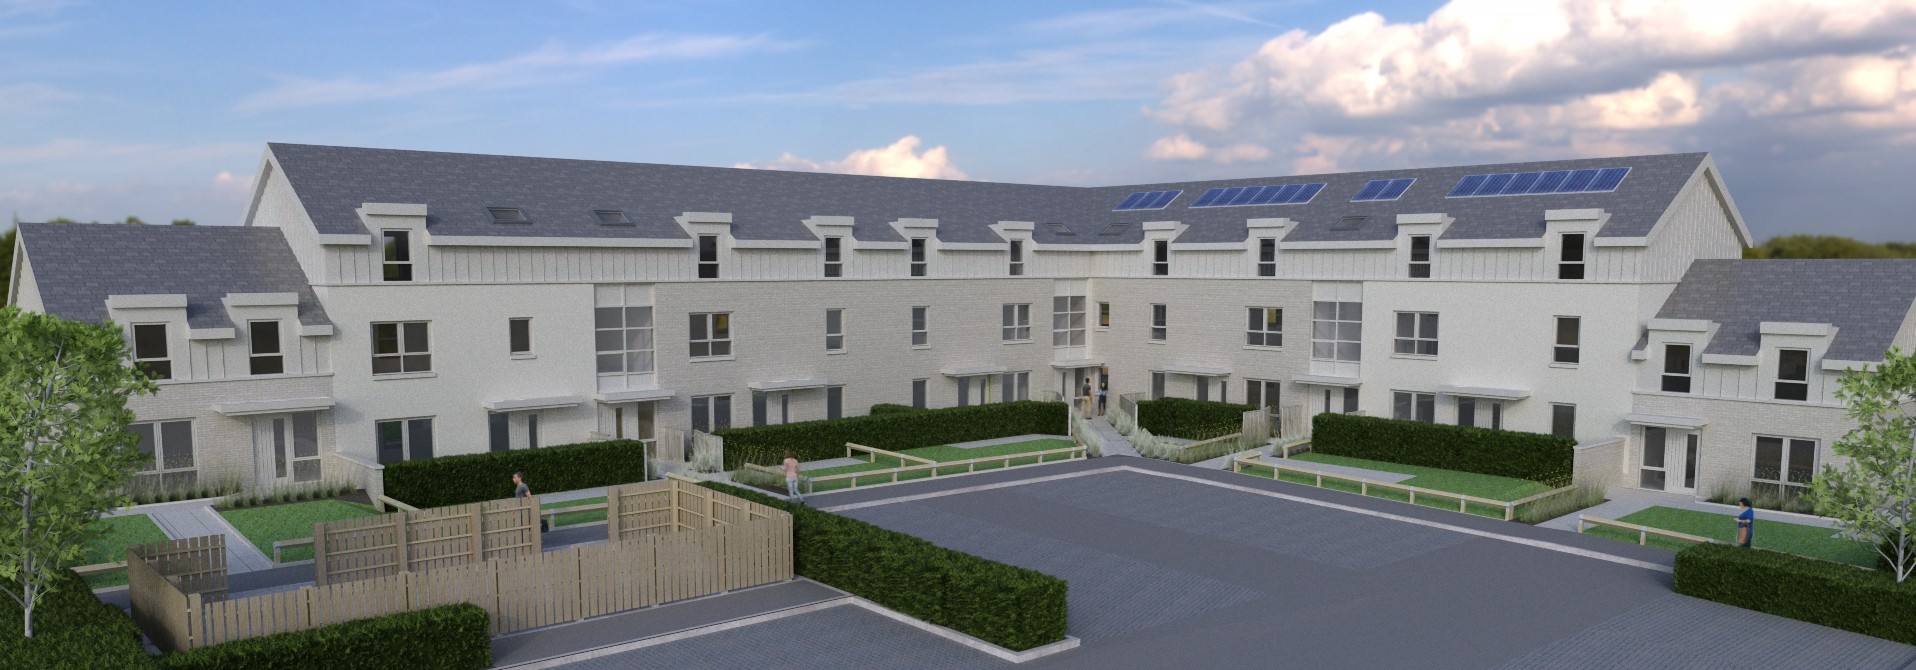 Ark launches £4.2m affordable housing development in Livingston